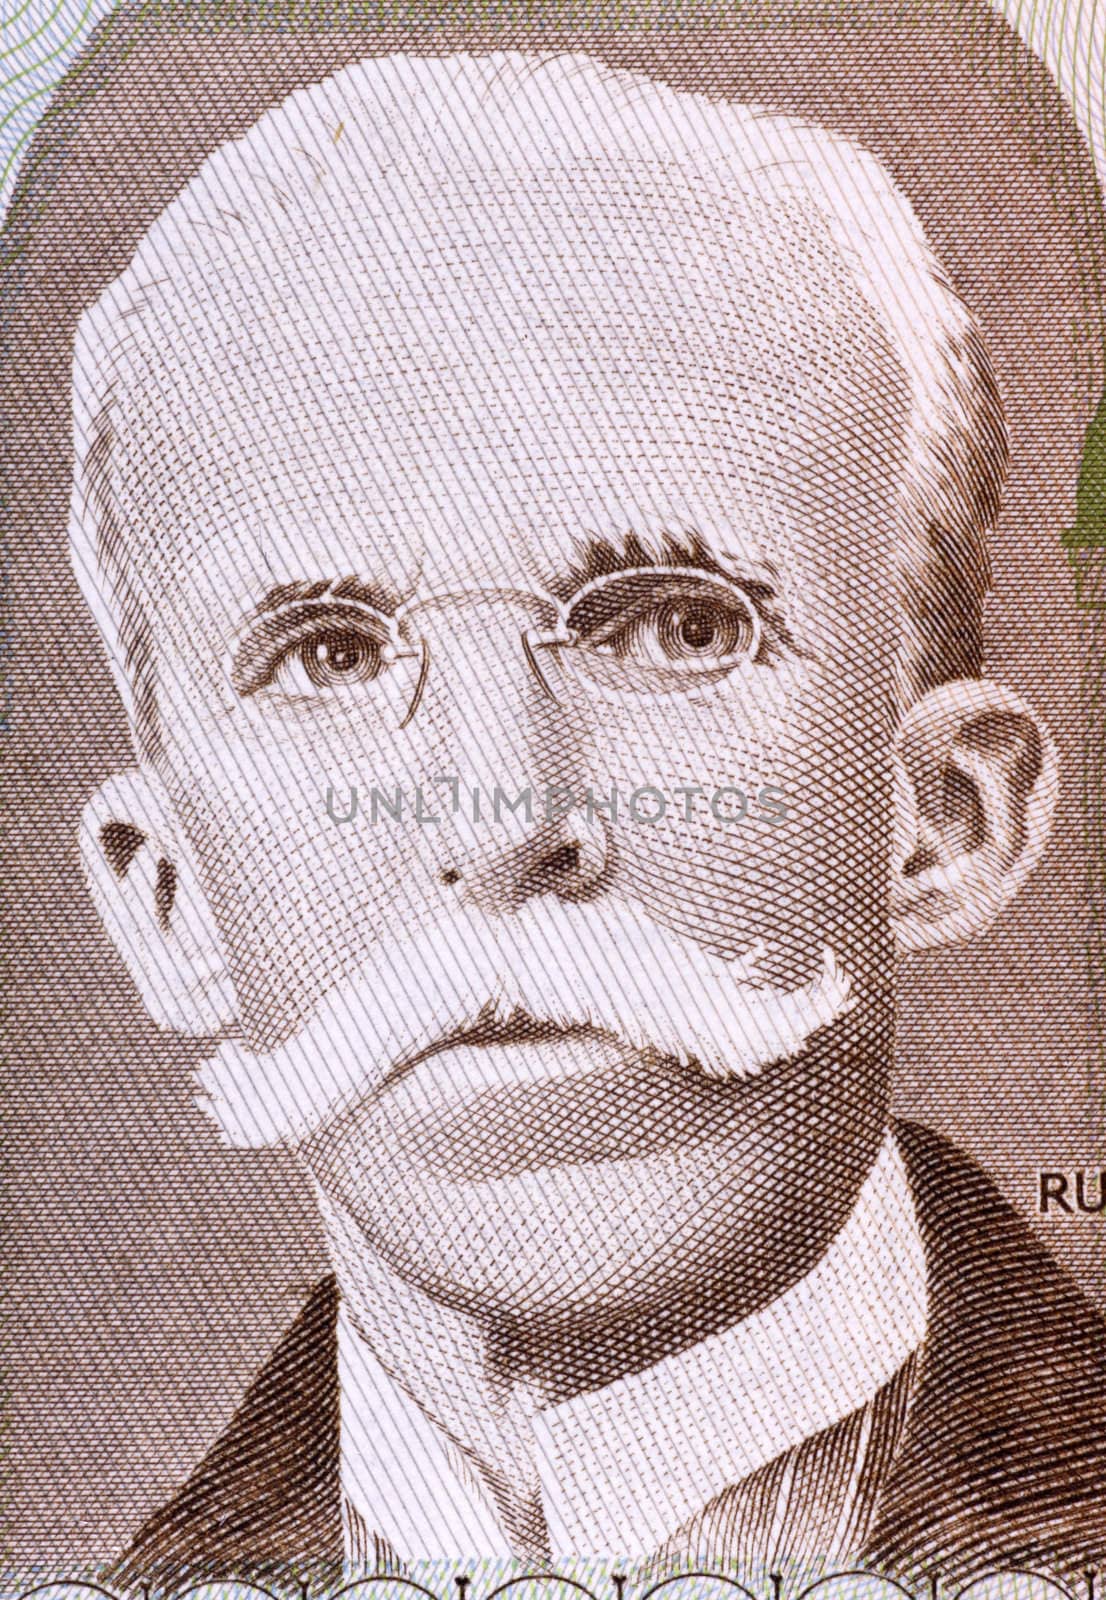 Rui Barbosa (1849-1923) on 10 Cruzados 1987 Banknote from Brazil. Brazilian writer, jurist, and politician.